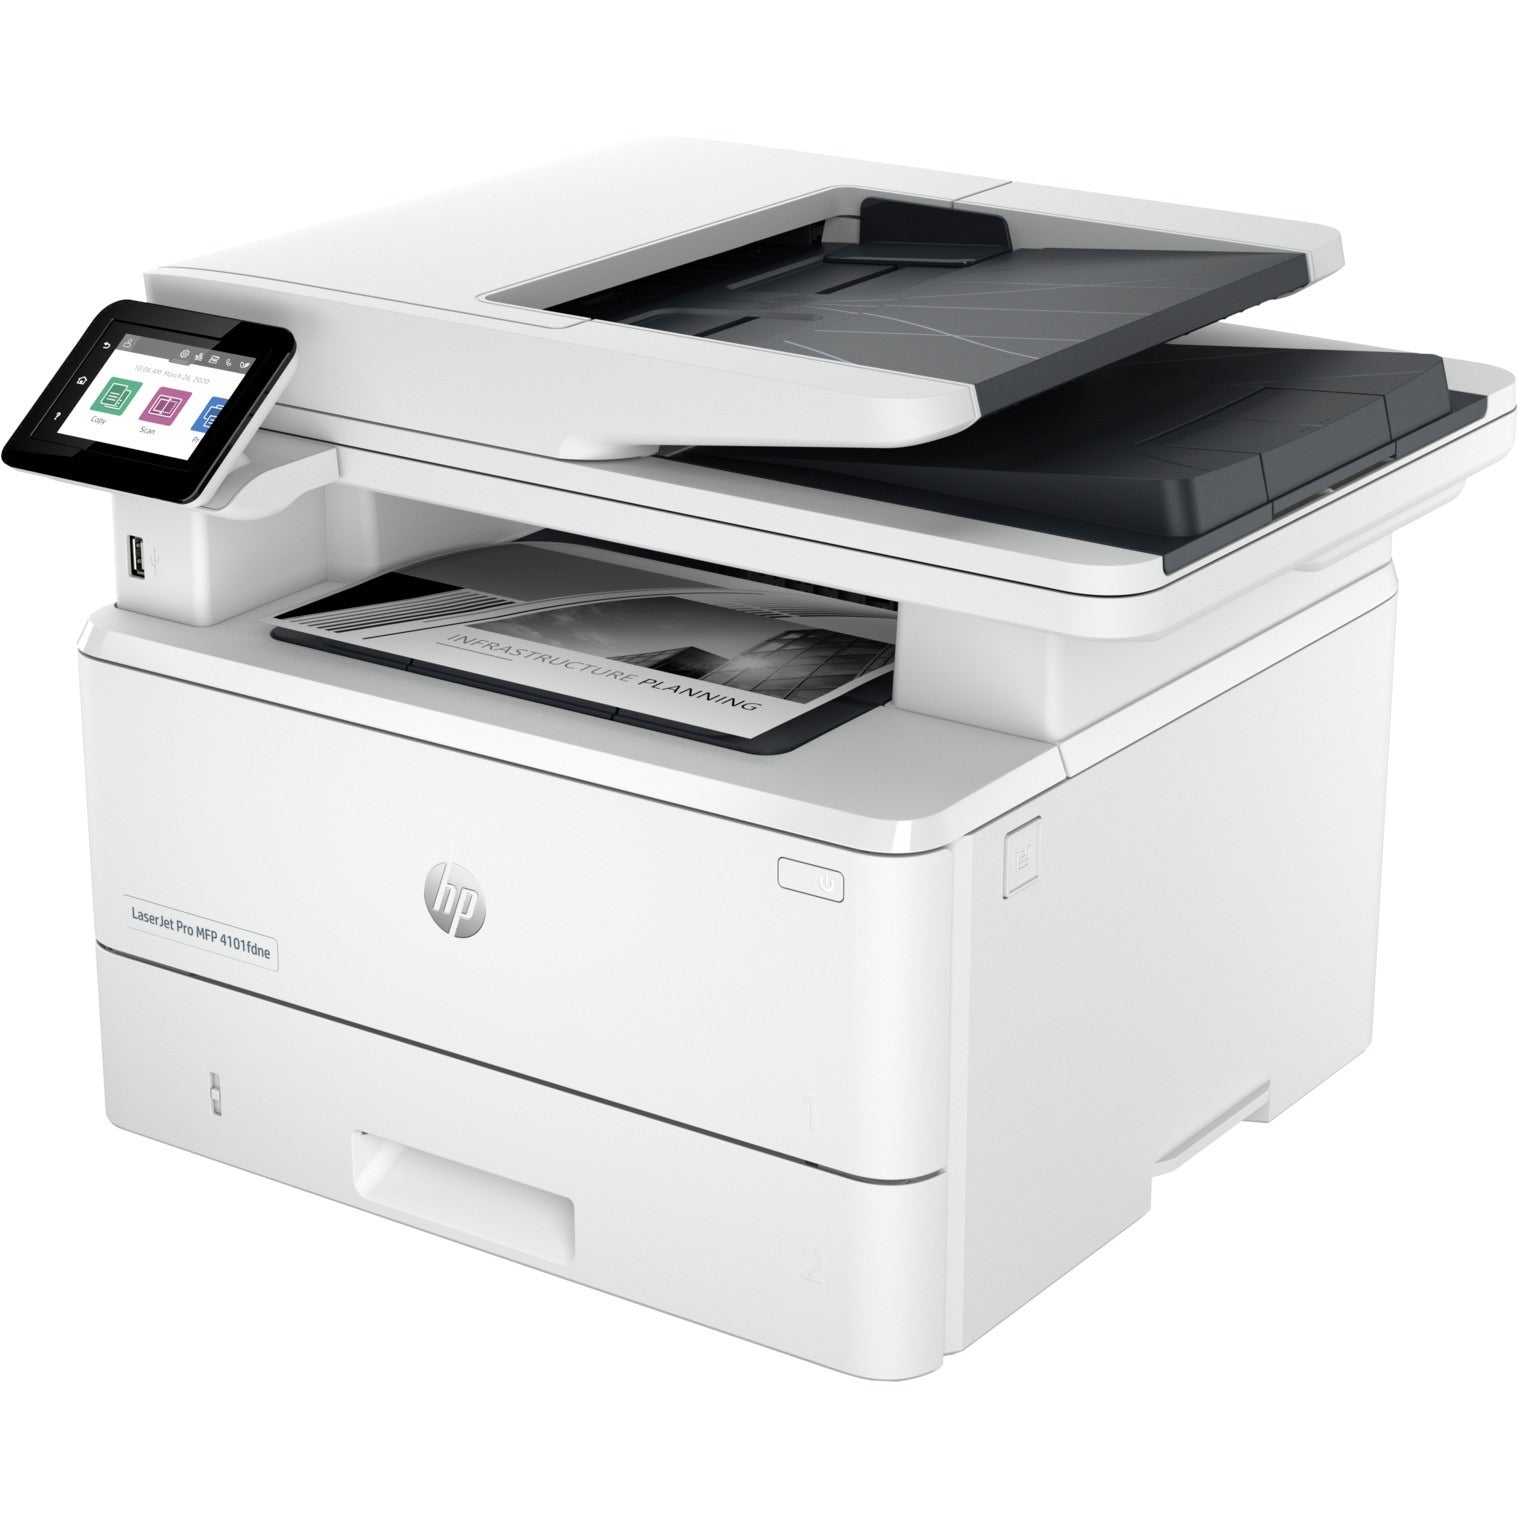 hp-laserjet-pro-4101fdne-laser-multifunction-printer-monochrome-white-copier-fax-printer-scanner-63-ppm-mono-print-4800-x-600-dpi-print-automatic-duplex-print-up-to-80000-pages-monthly-color-flatbed-scanner-1200-dpi-optical-scan-m_hew2z618e - 2